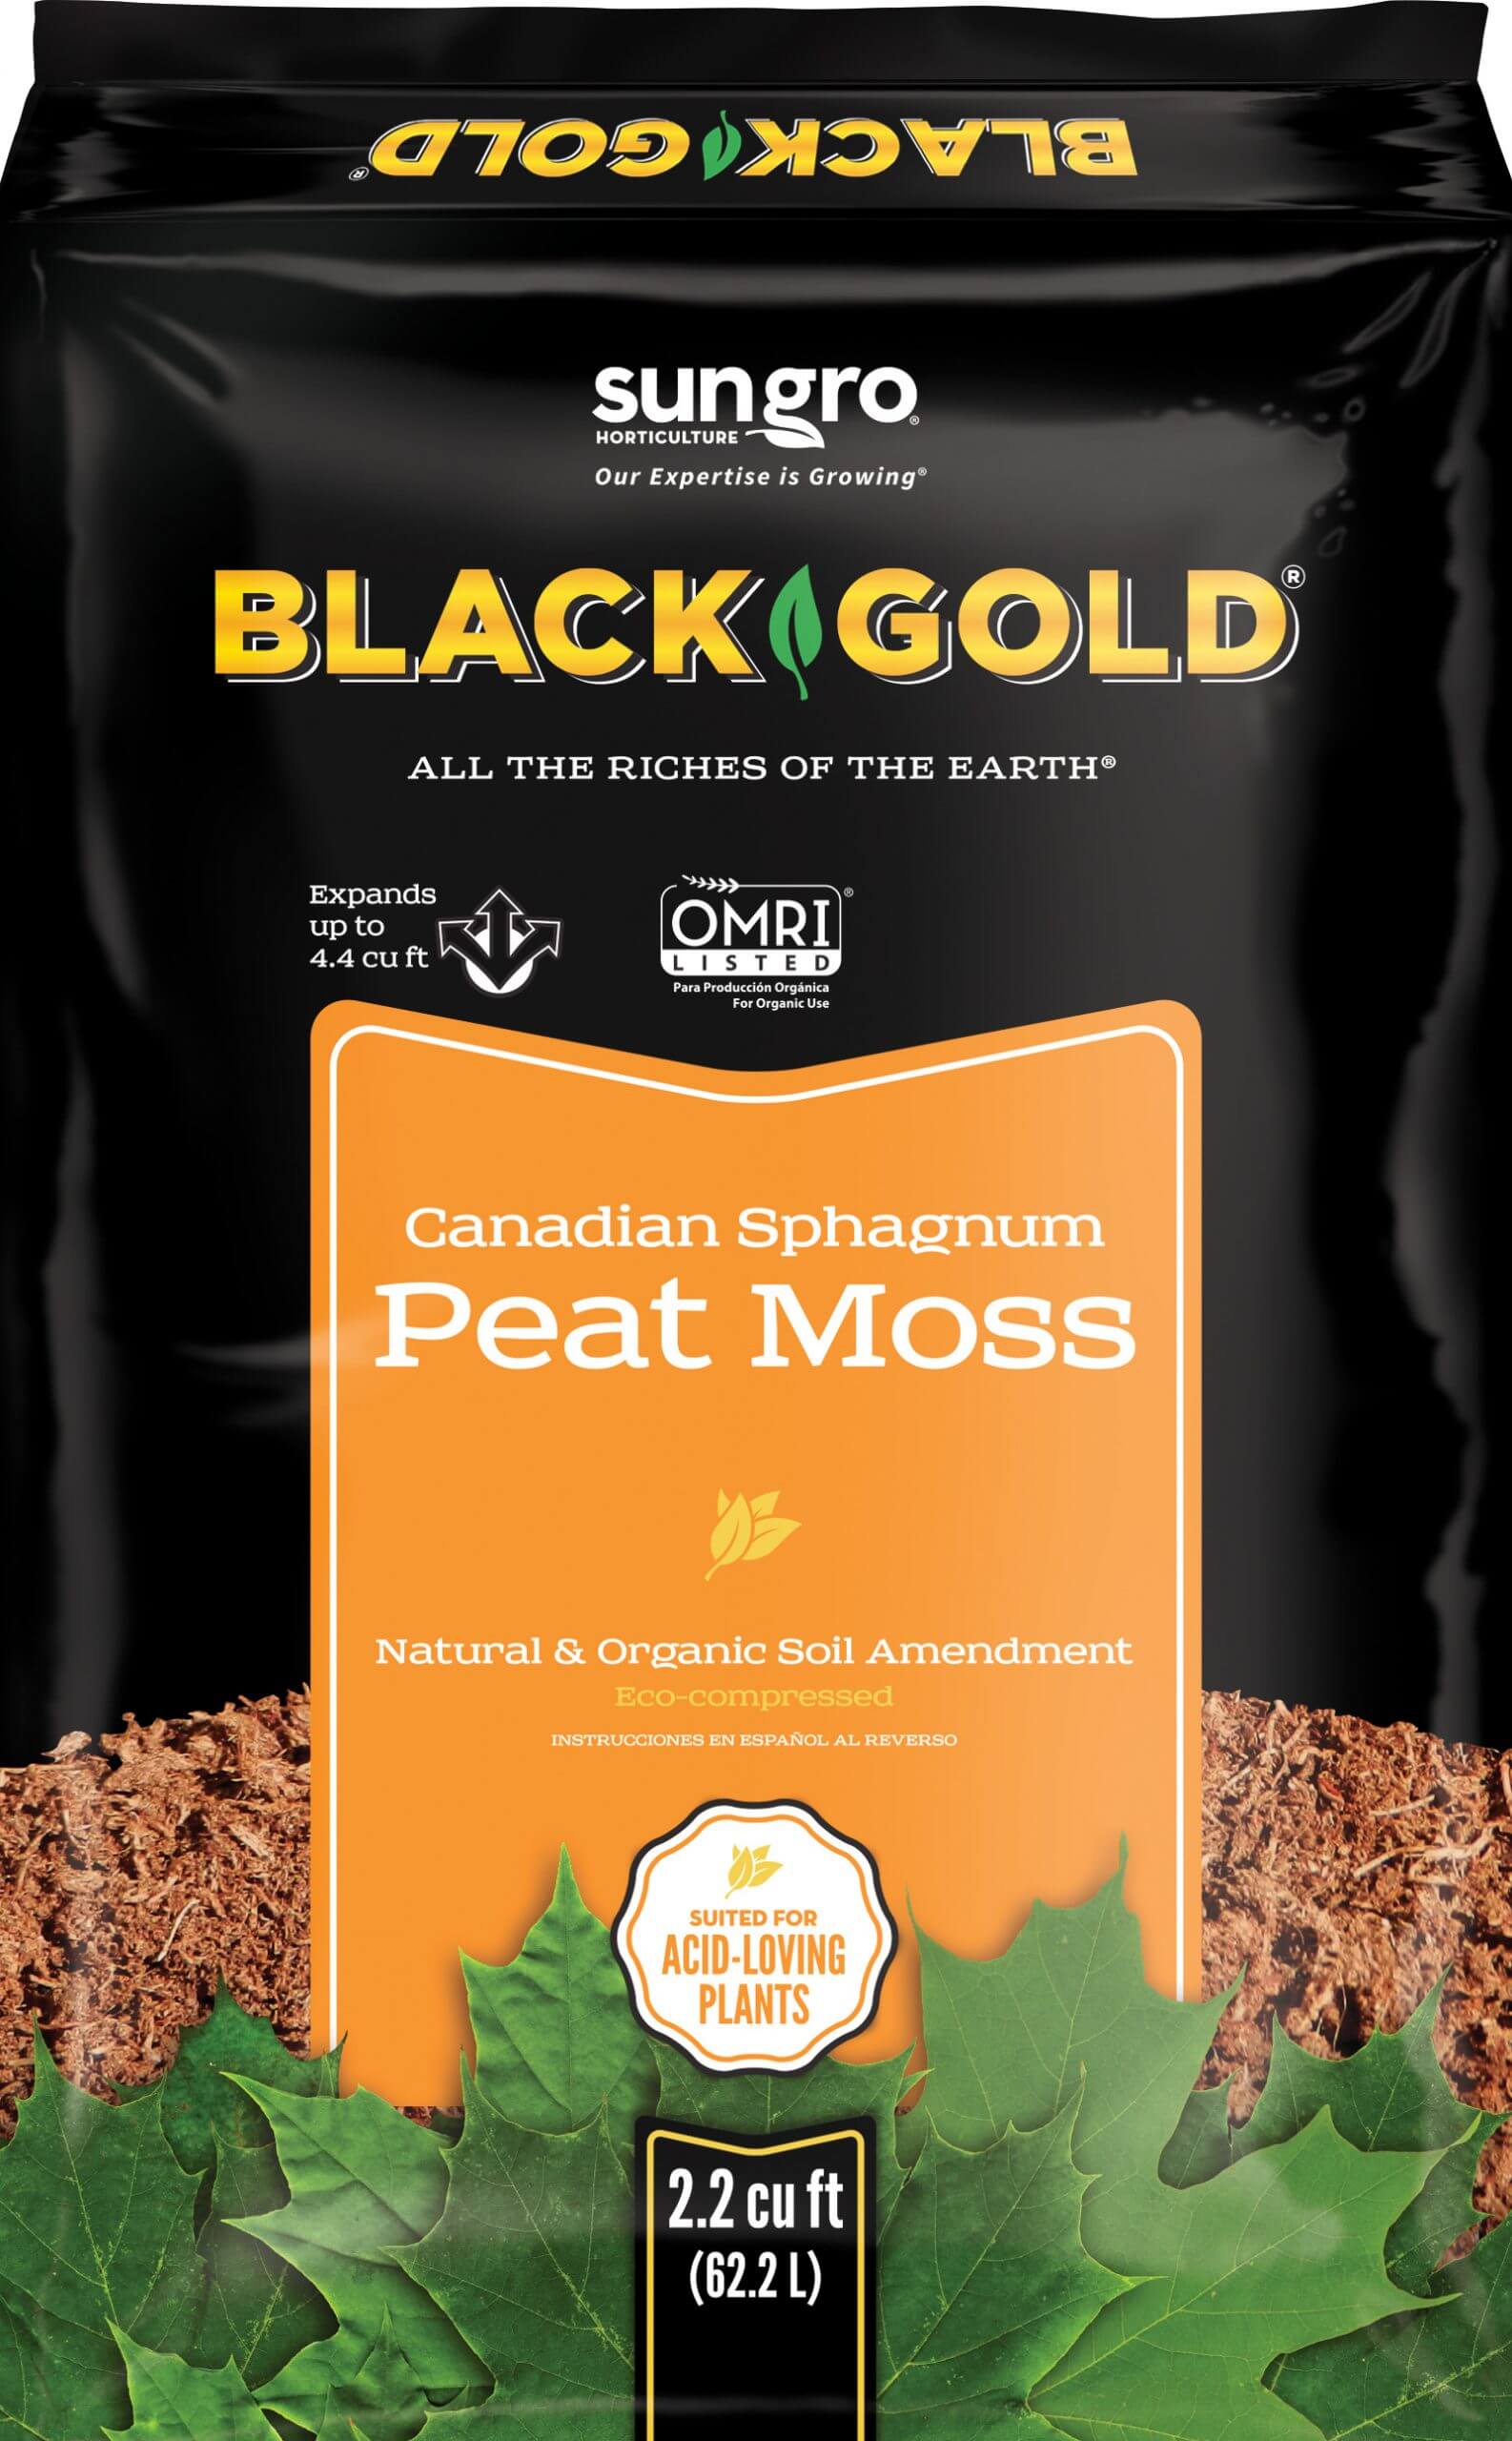 How to Use Soil Amendments-Sphagnum Peat Moss - Organic Gardening